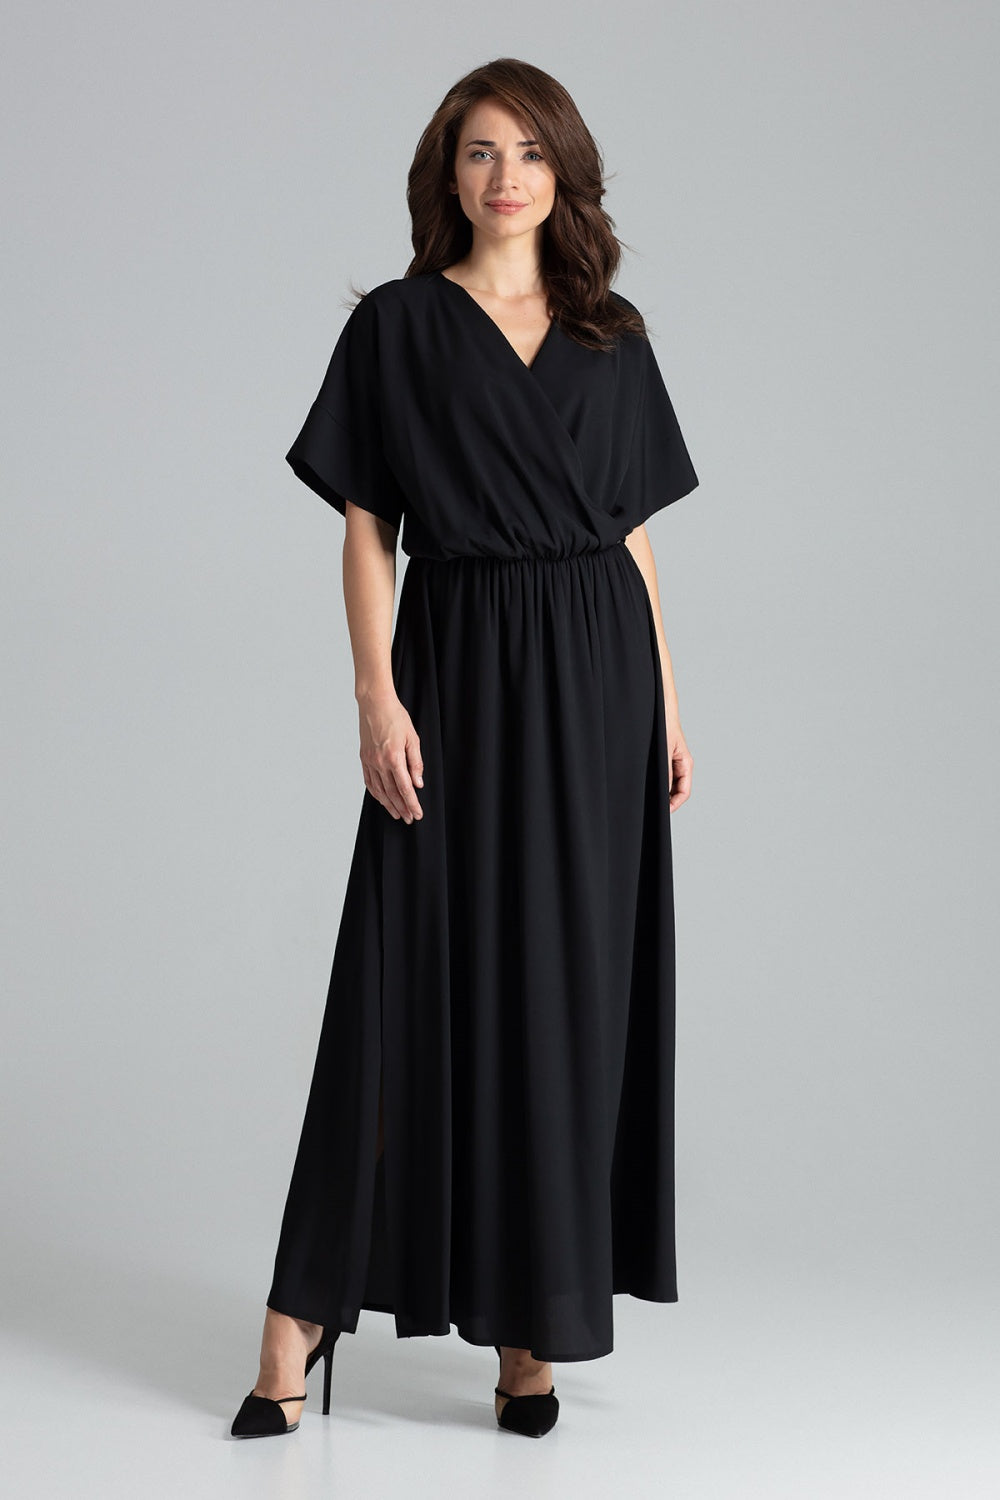 Black long dress with short kimono sleeves, elastic waistband, and side slits.